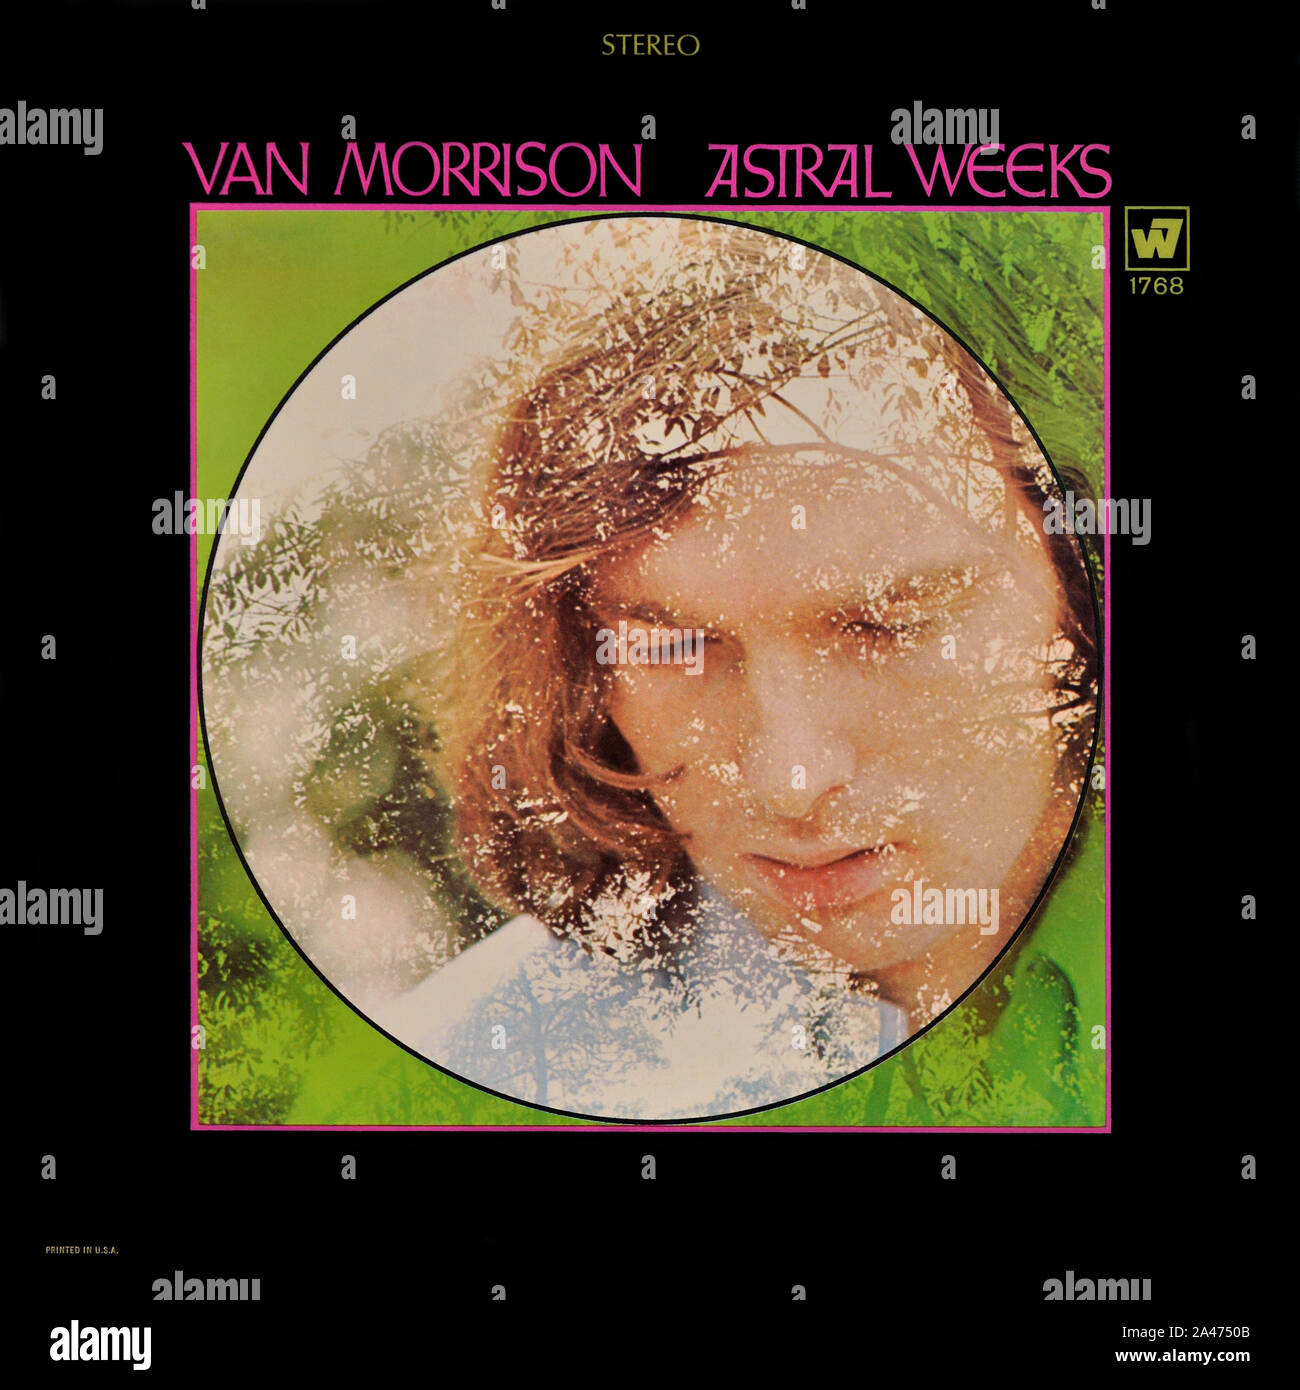 Van Morrison - original Vinyl Album Cover - Astral Weeks - 1968 Stockfoto